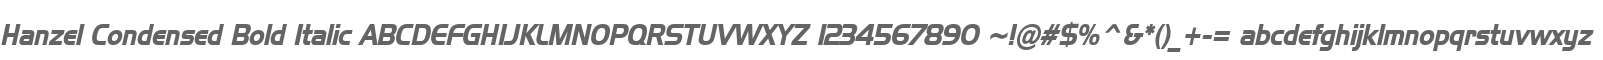 Hanzel Condensed Bold Italic